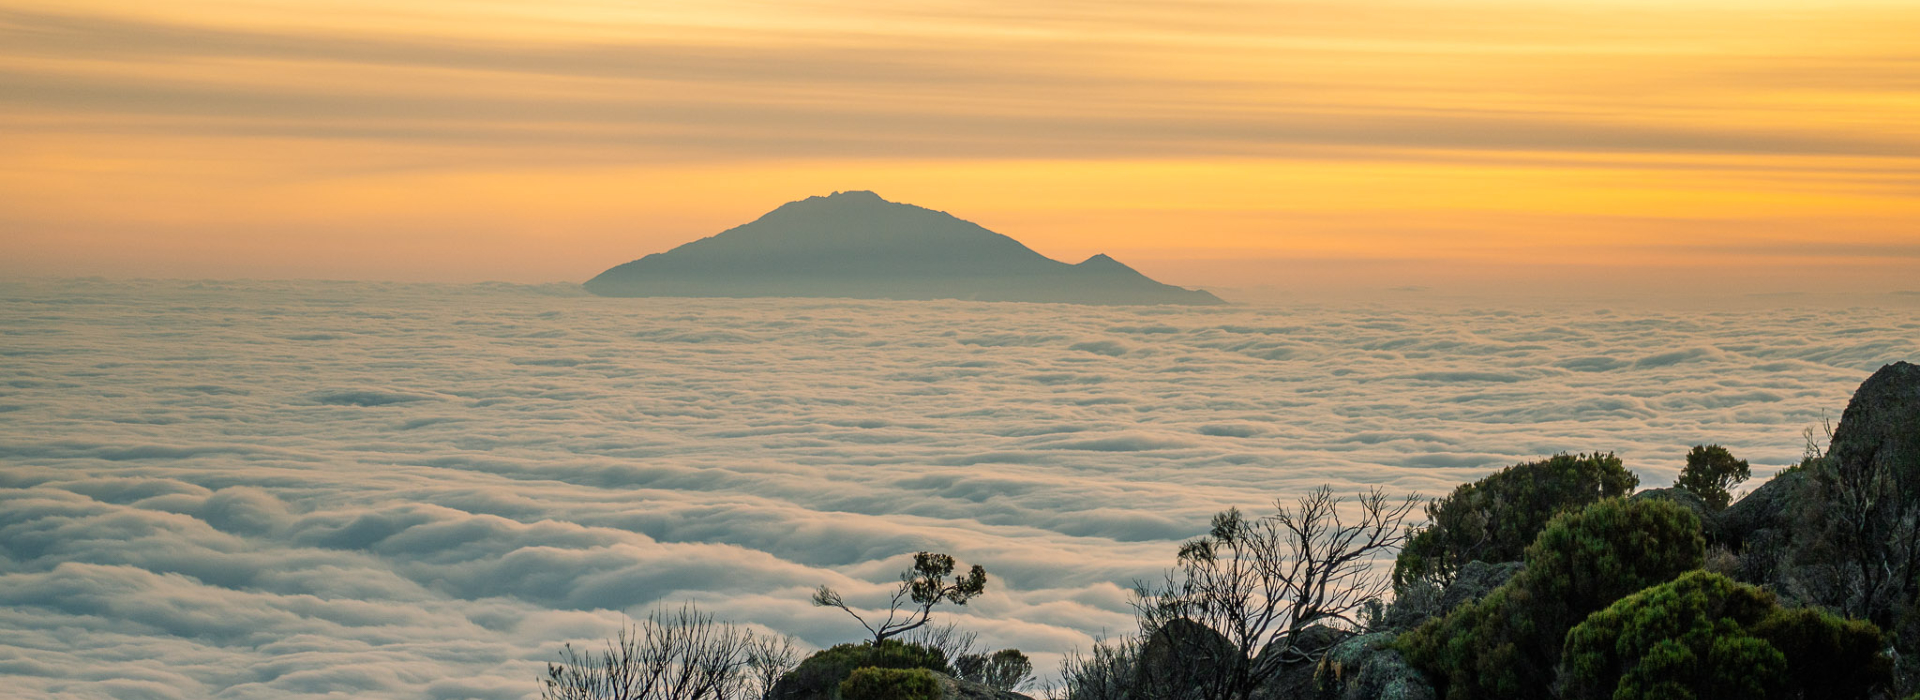 View from Mt Kilimanjaro, Tanzania